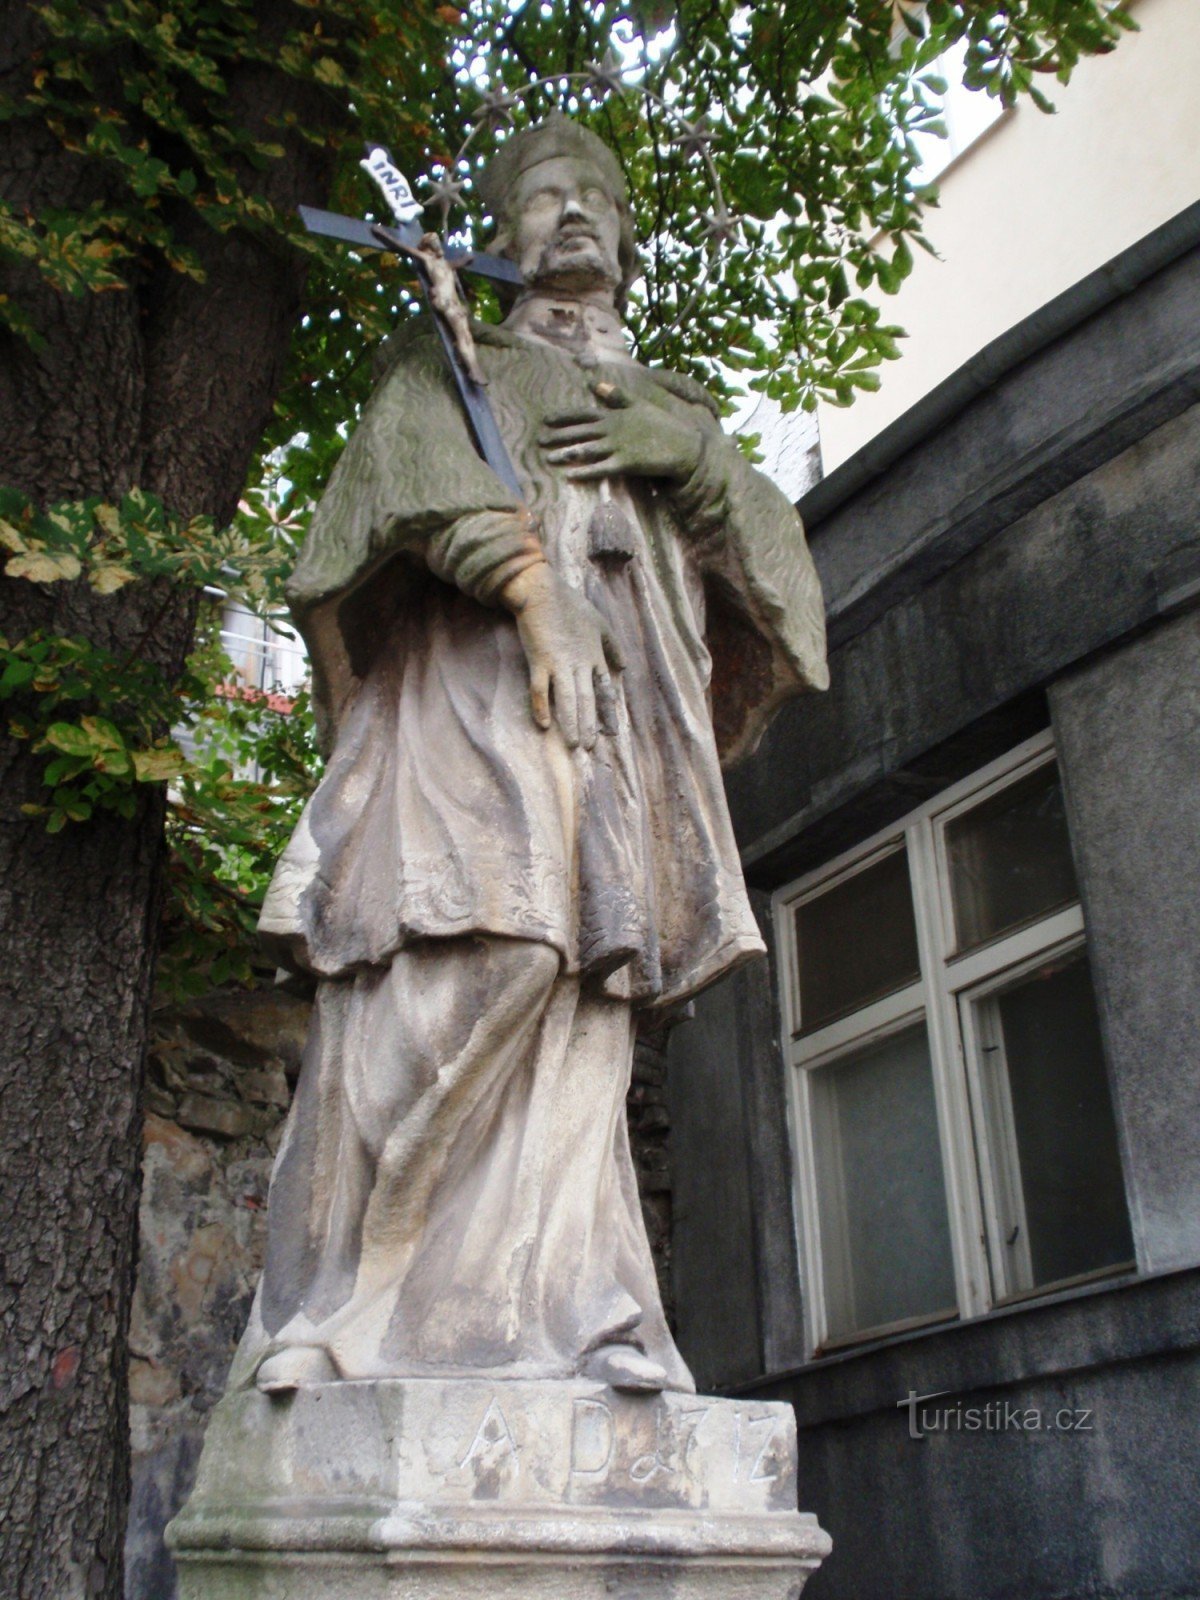 Statue of St. Jan Nepomucký in Ostrava